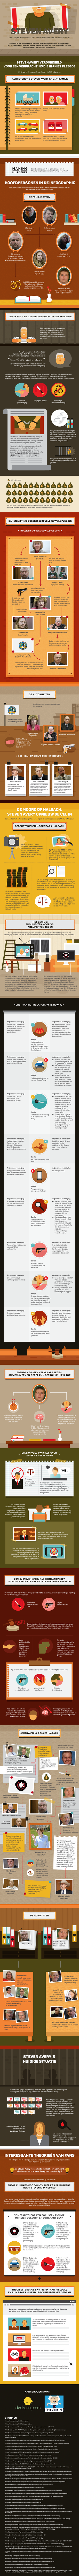 Steven Avery Infographic  feiten en onderzoeksresultaten